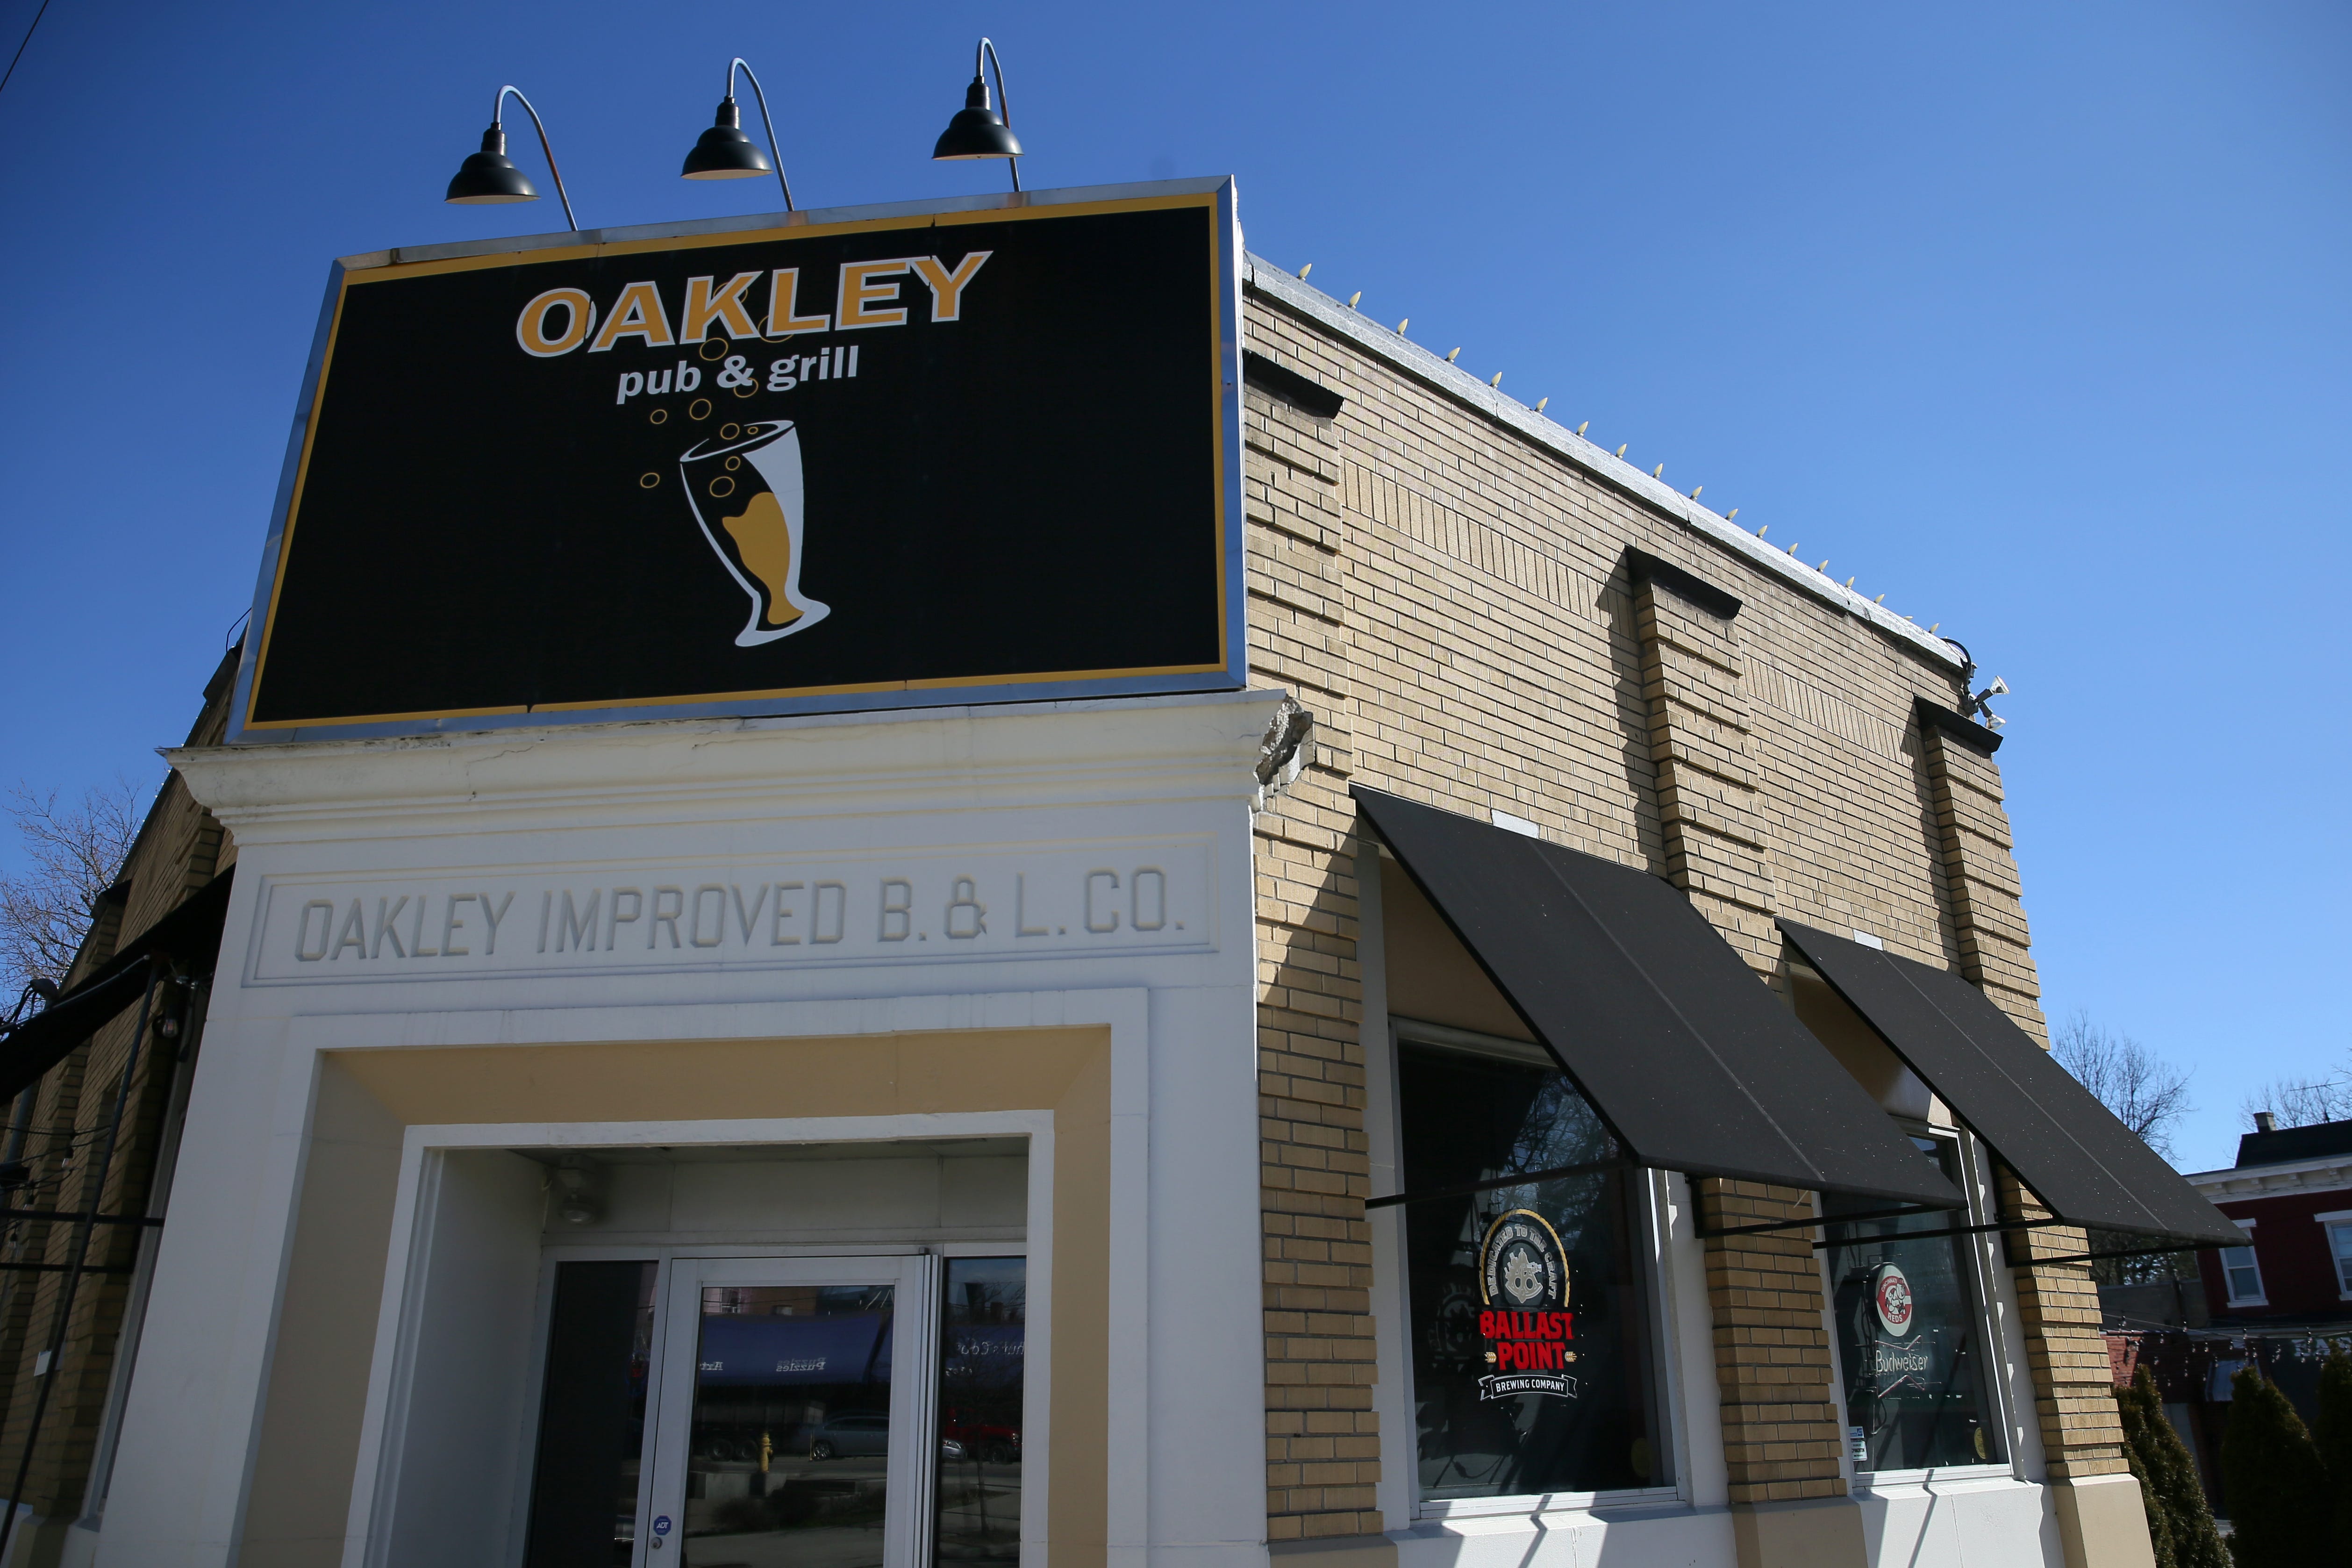 oakley pub and grill